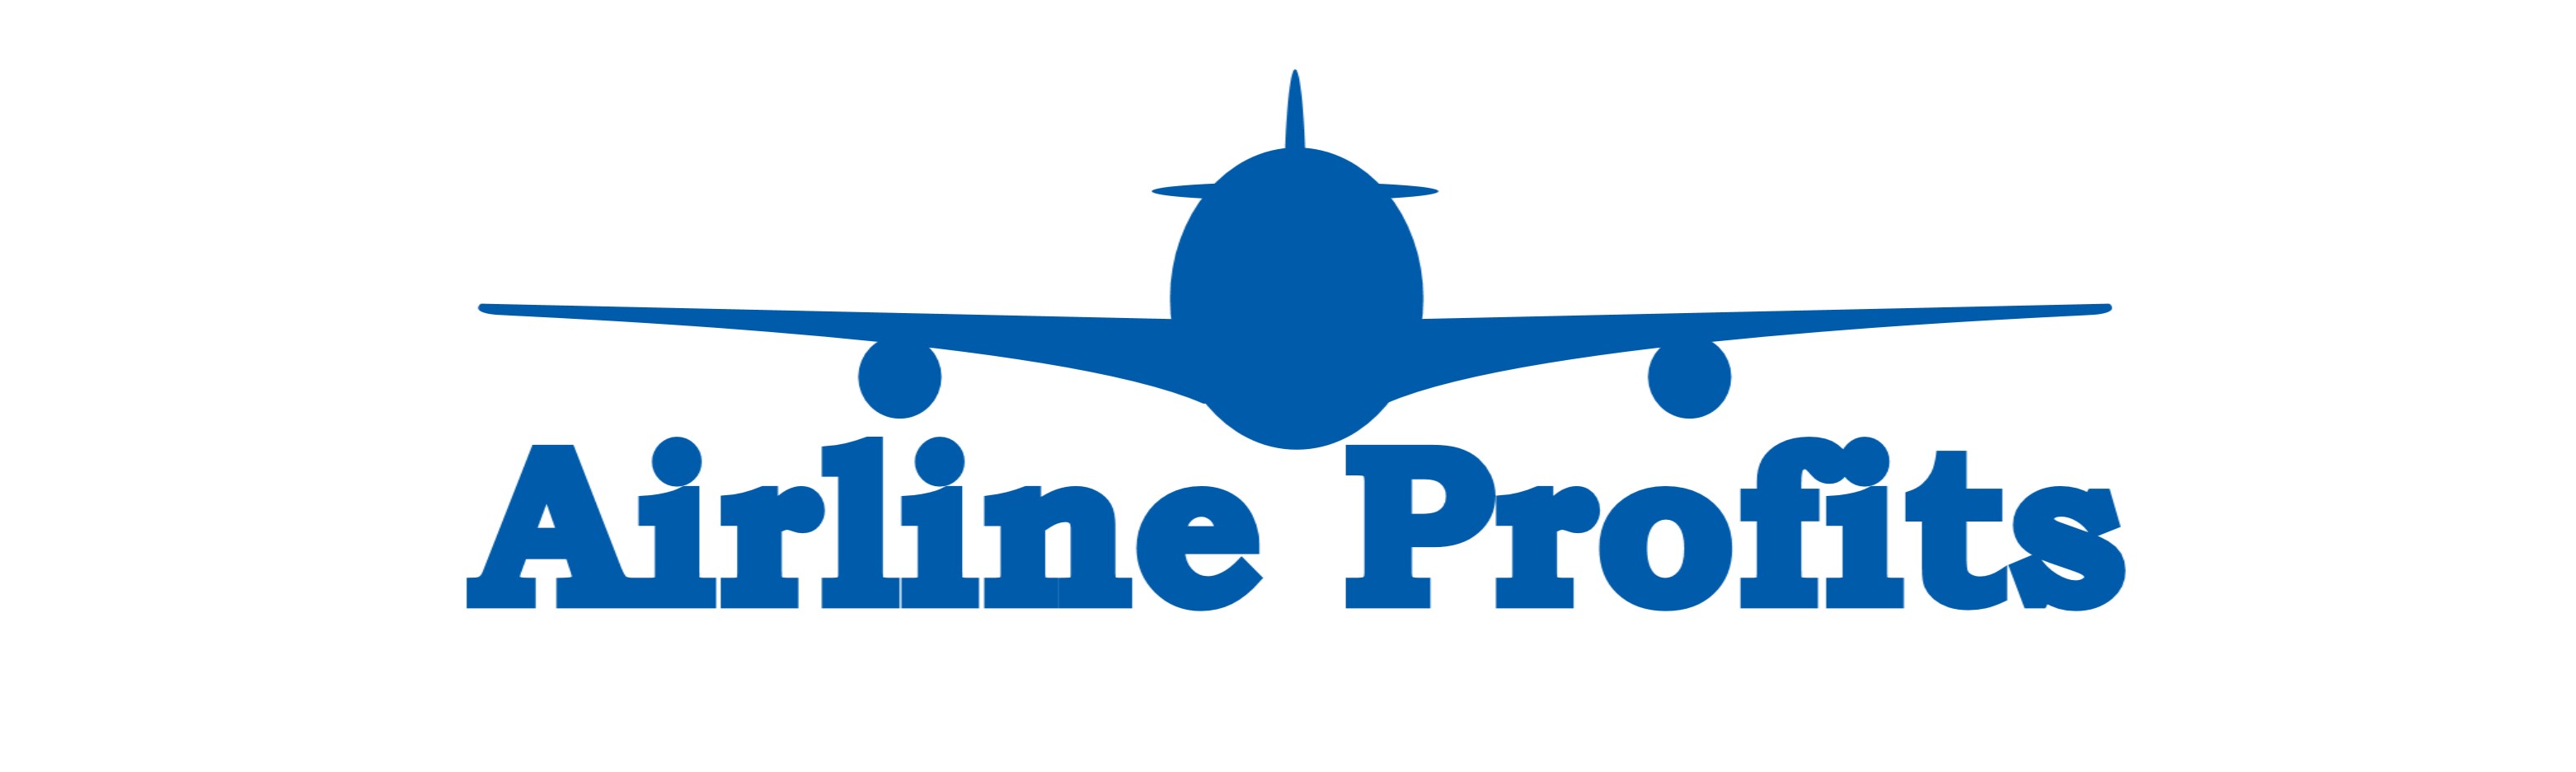 Airline Profits